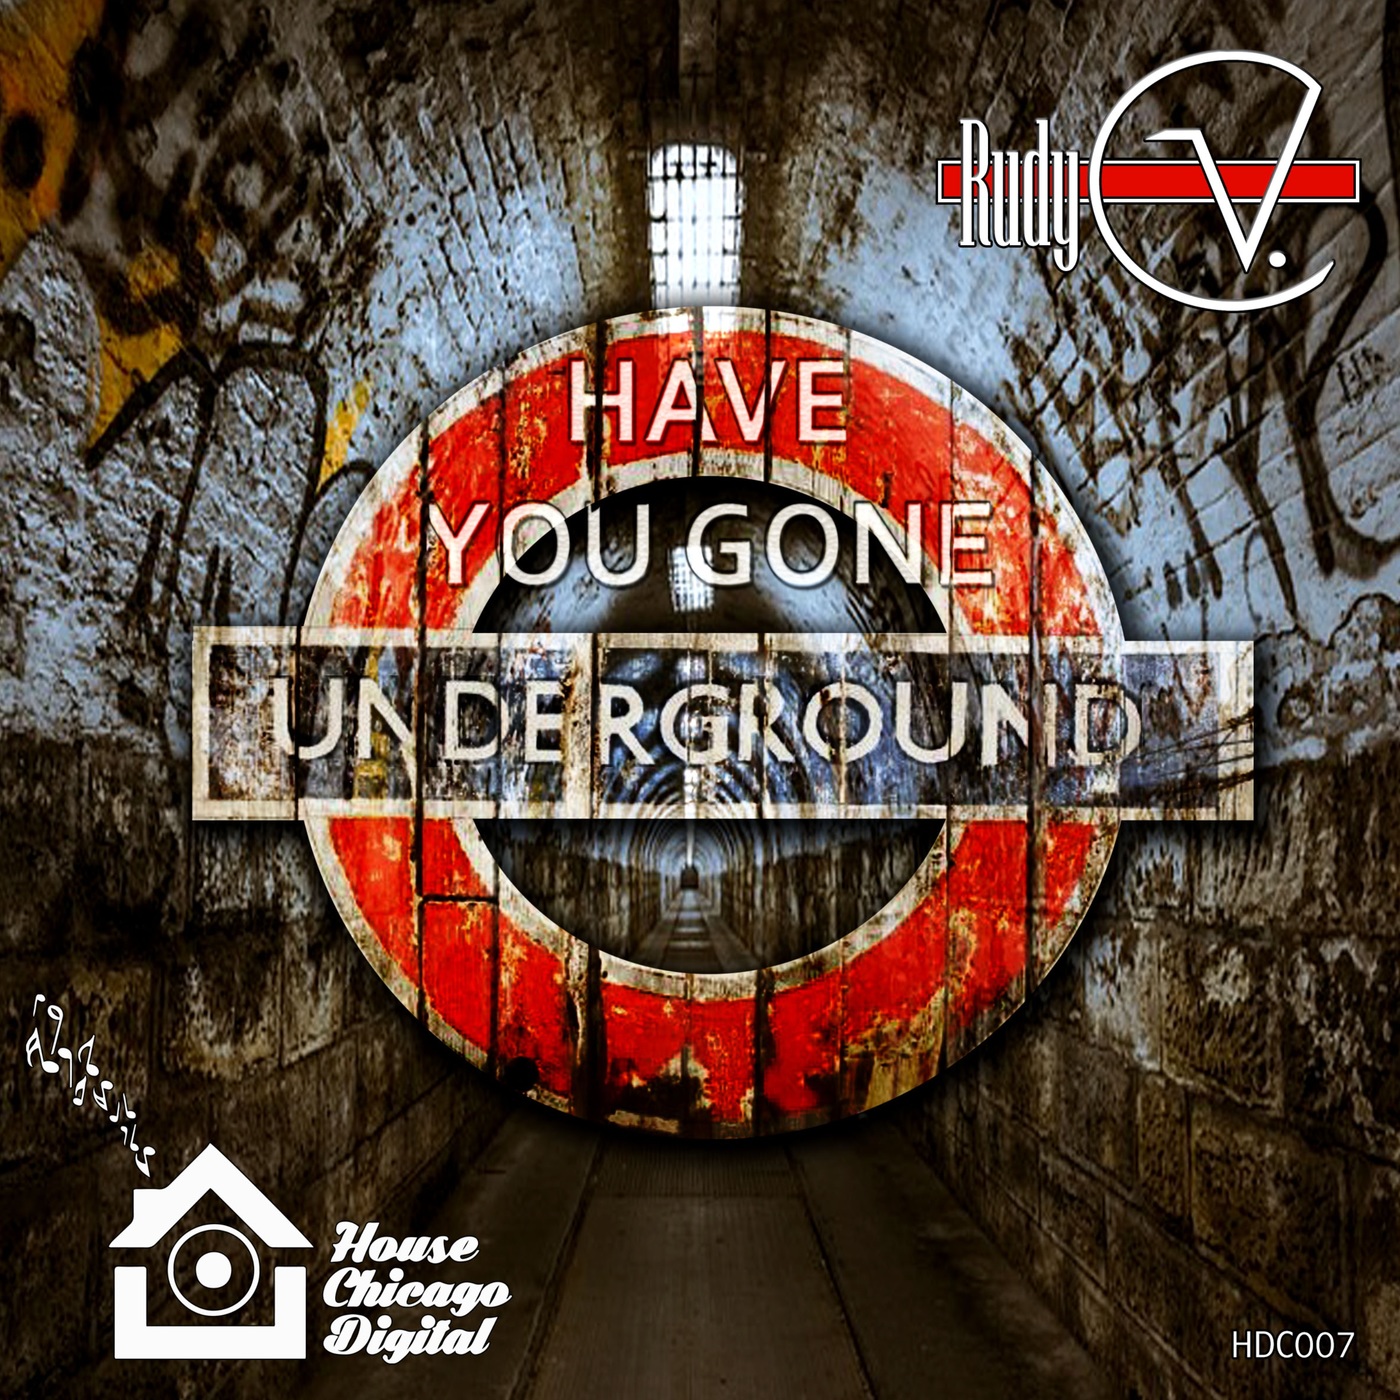 Rudy V. - Have You Gone Underground / House Chicago Digital